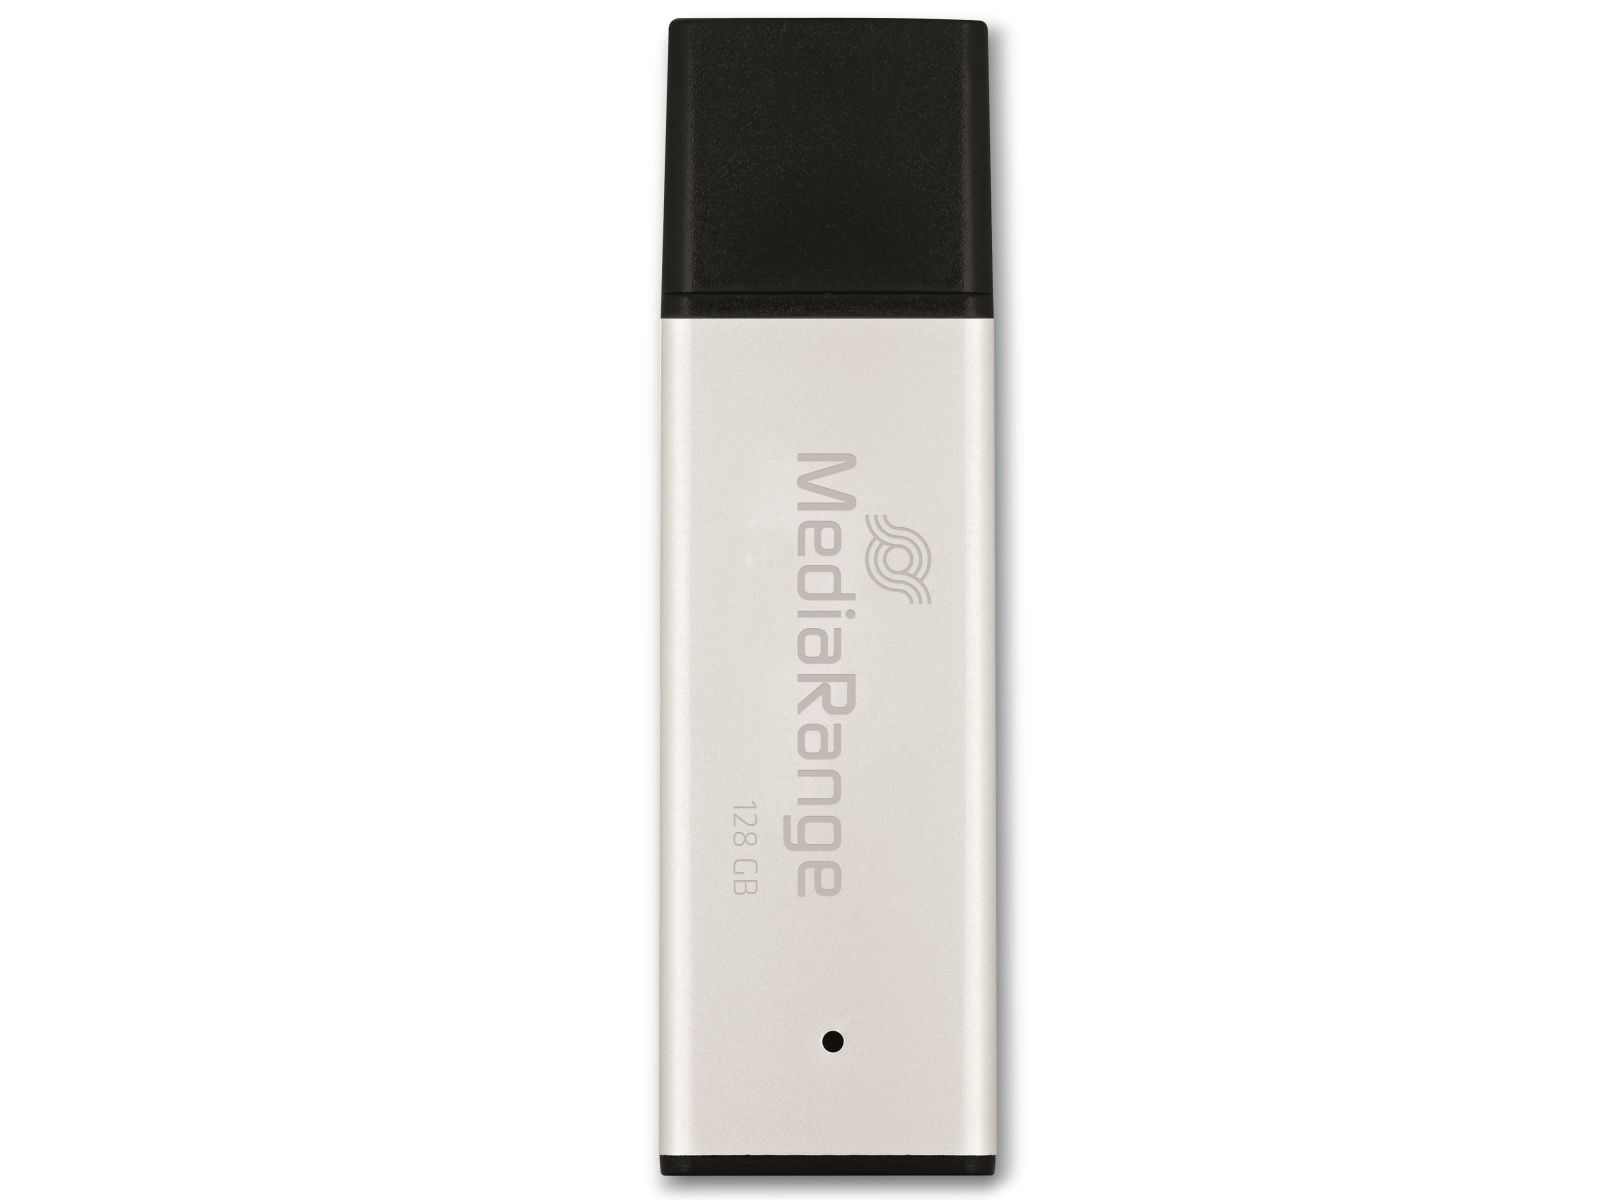 MEDIARANGE USB-Stick MR1902, USB 3.0, GB USB-Stick GB) 128 128 (schwarz/silber